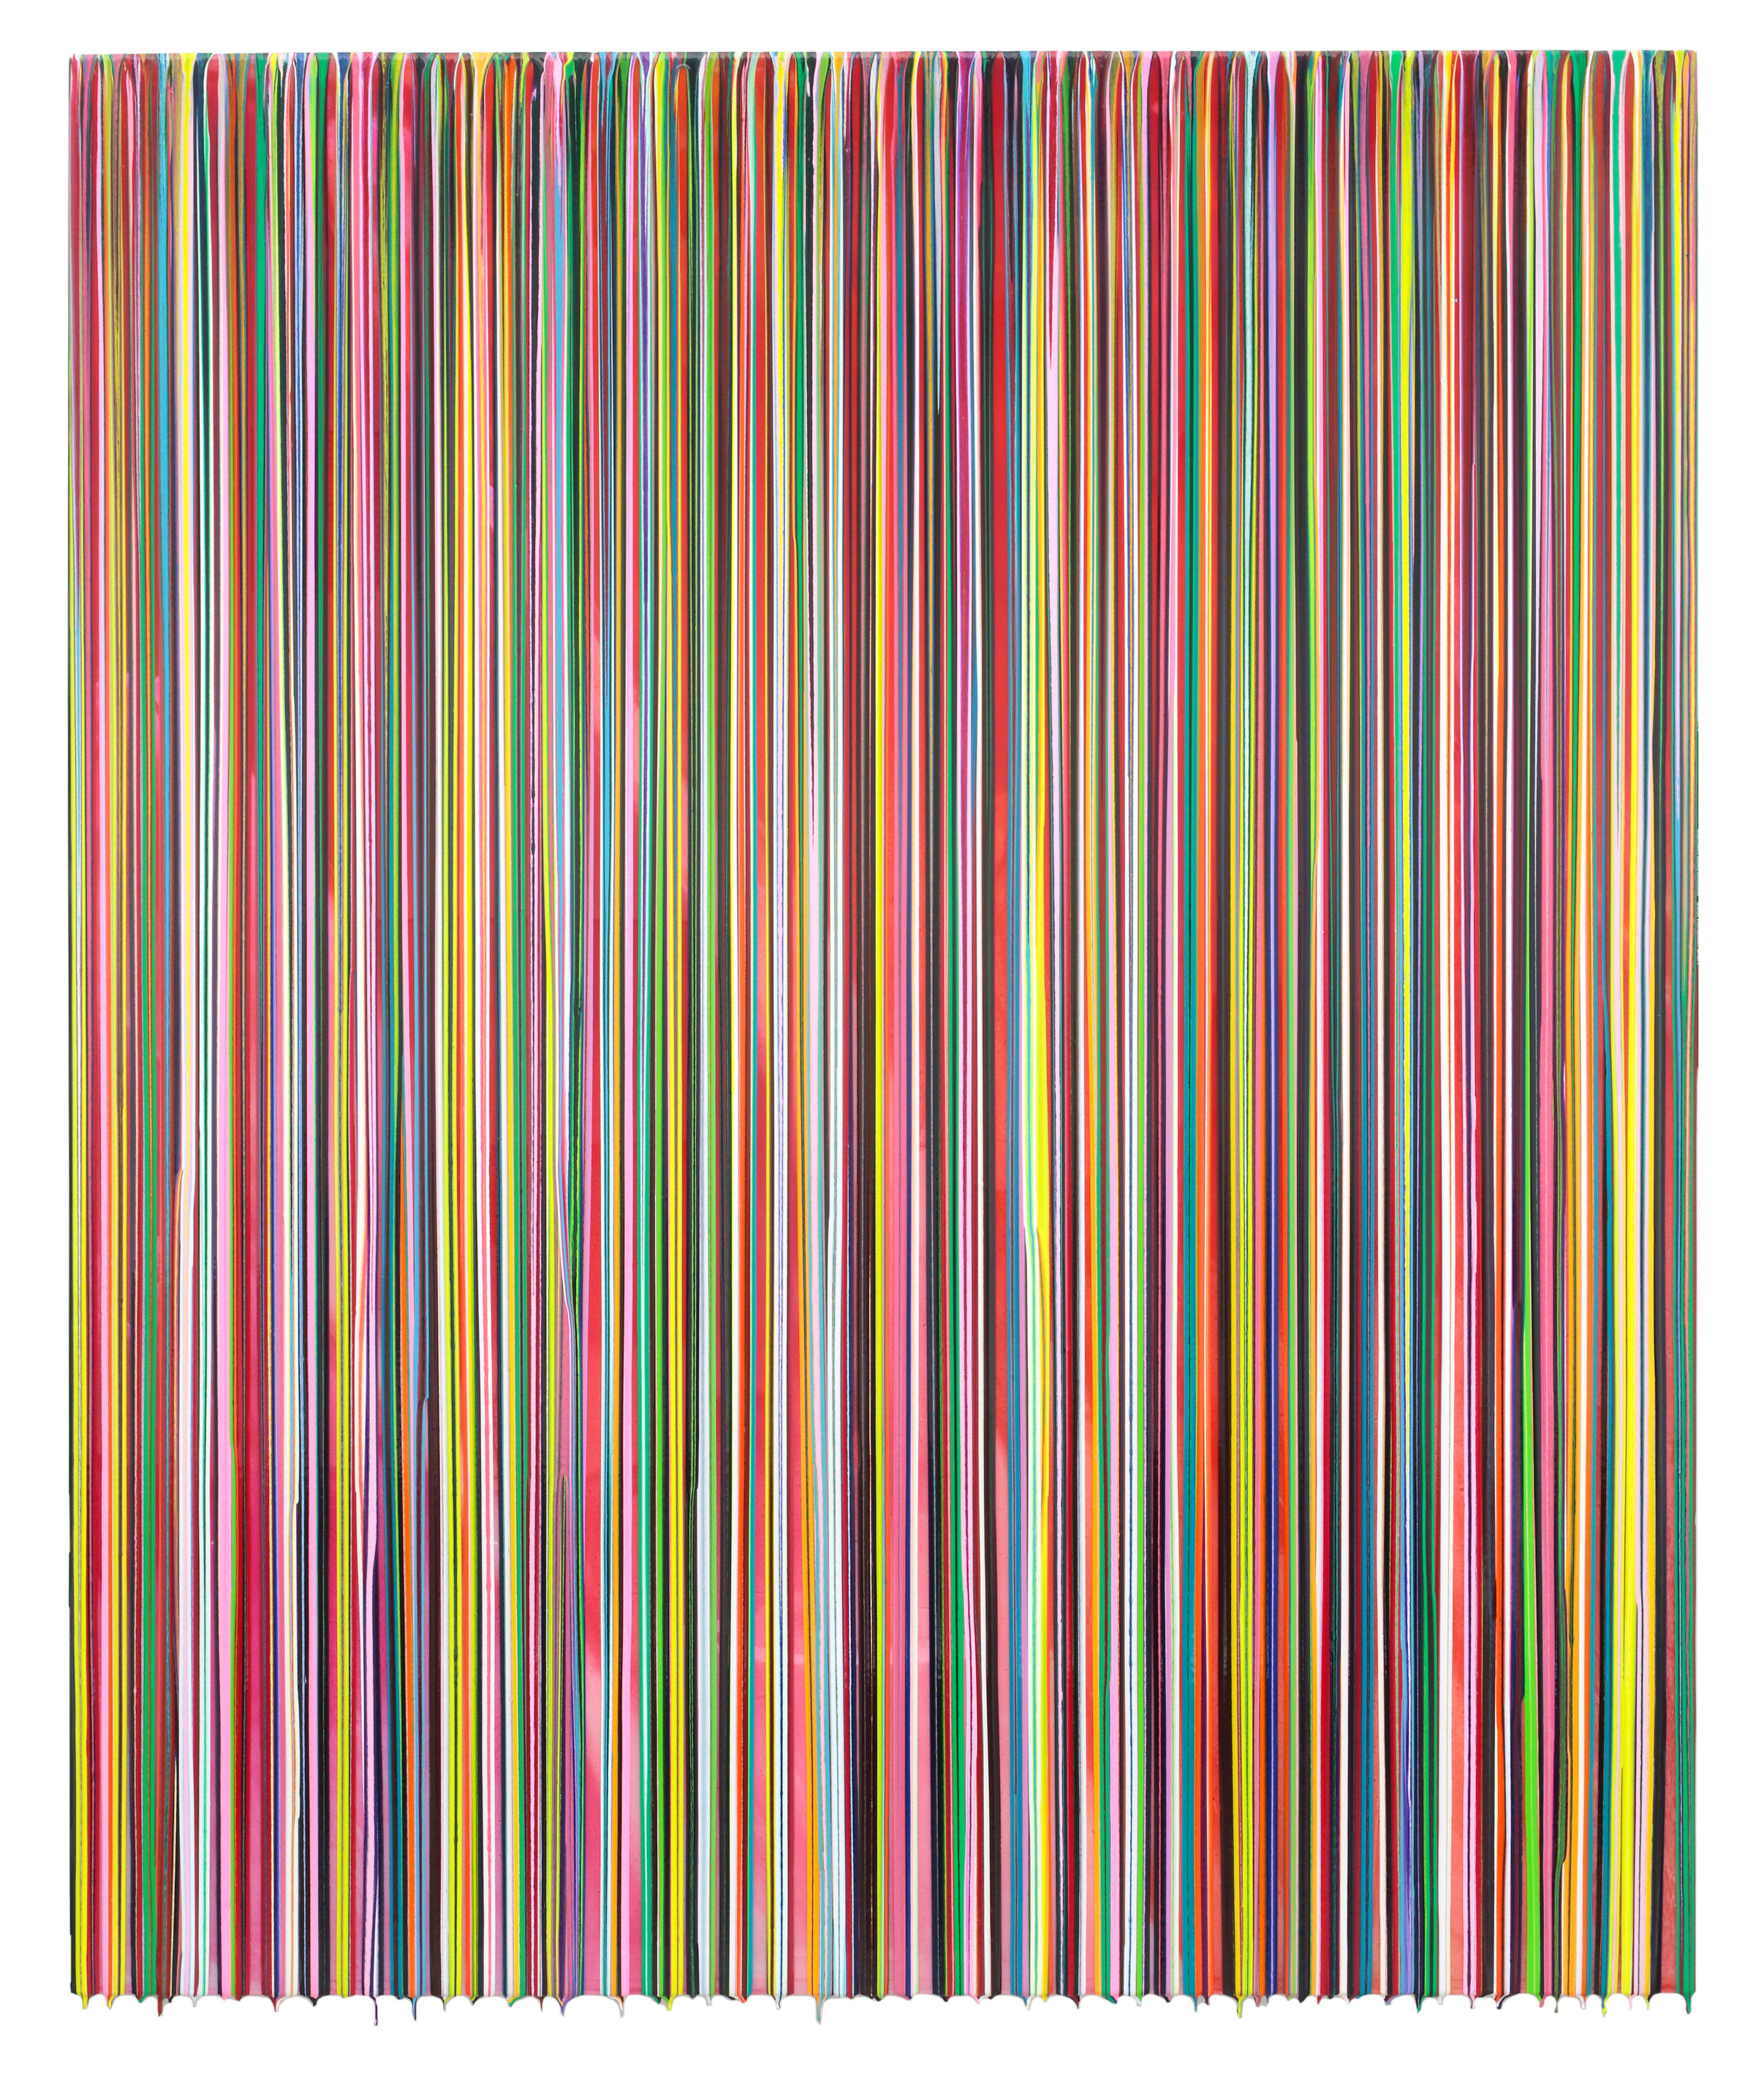 IGOTTOKEEPMETHERE(AWAKEONATRAIN), 2015, Epoxy resin and pigments on wood. 72 x 60 inches, 182.9 x 152.4 cm, AMY#22622